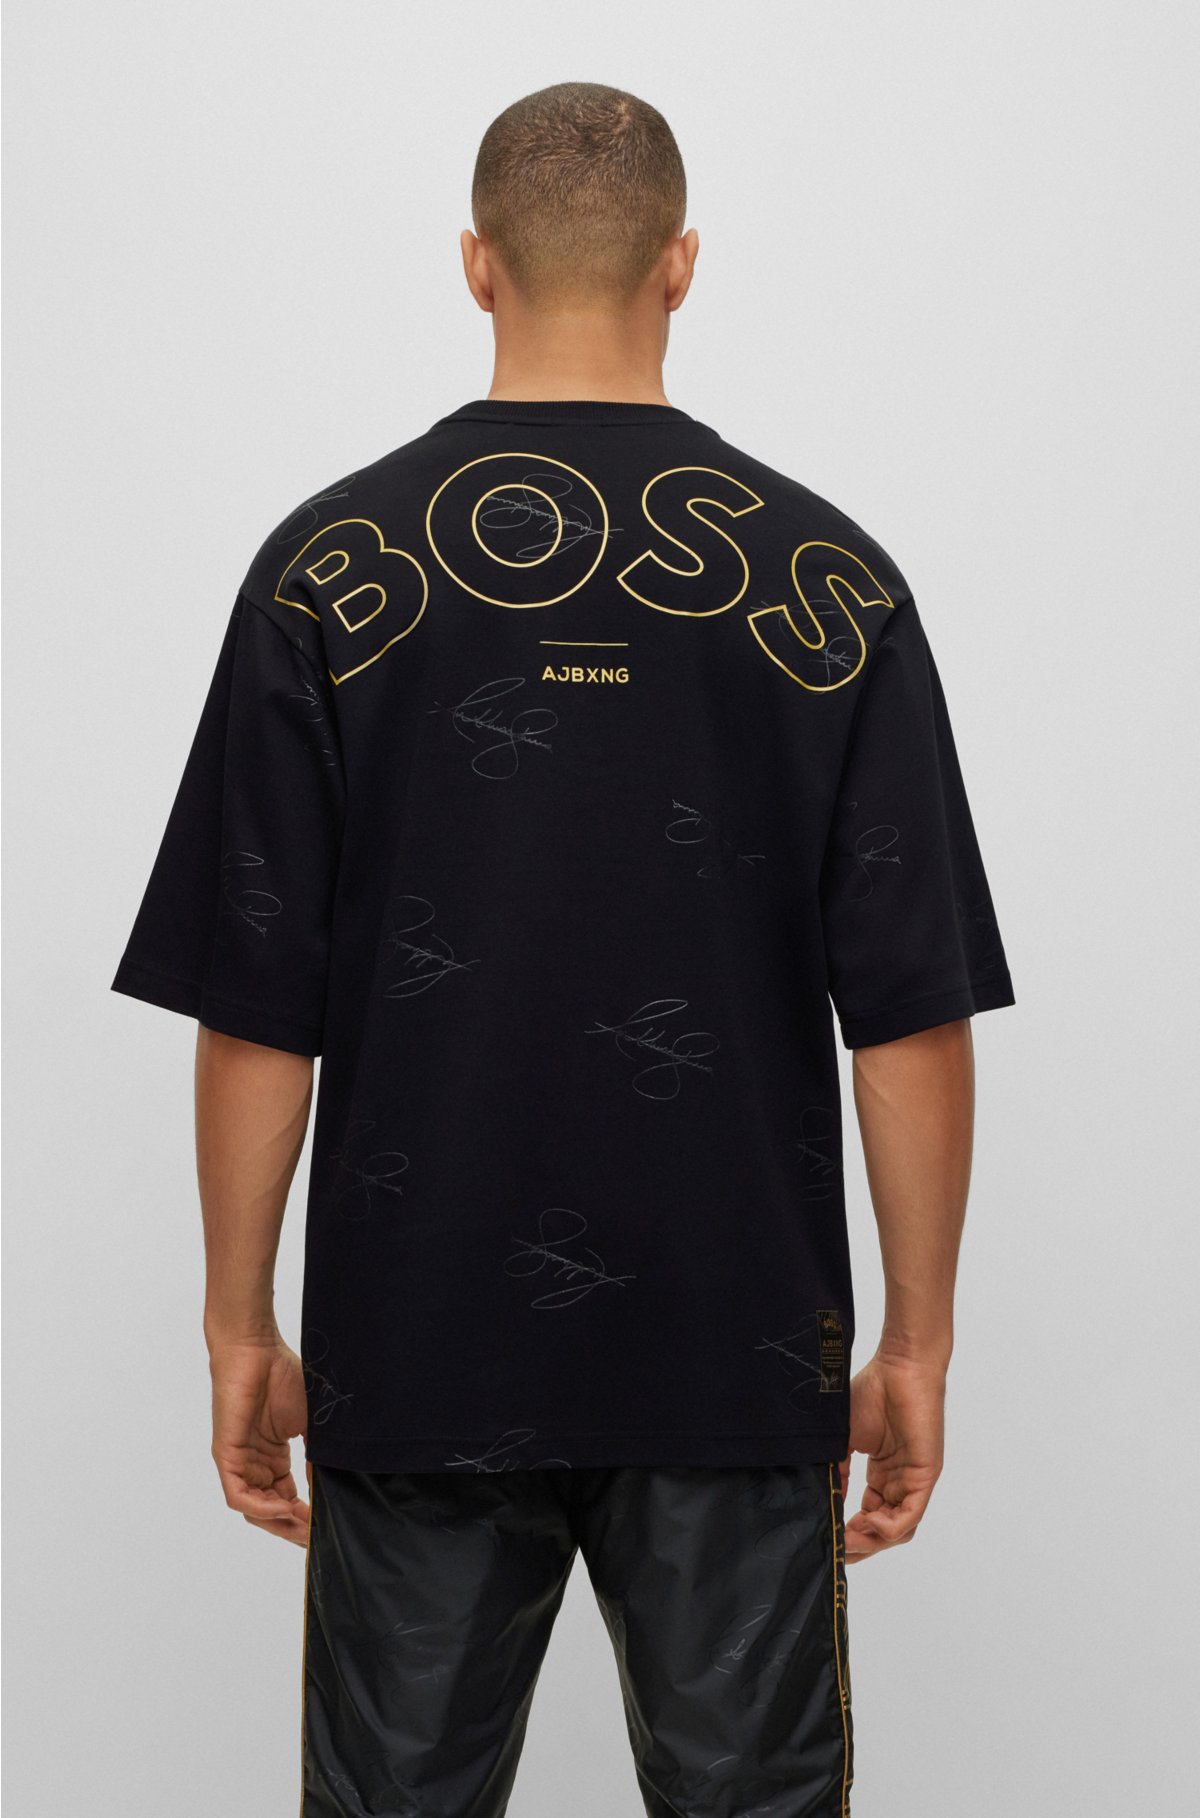 with signatures T-shirt BOSS x interlock-cotton - BOSS collaborative AJBXNG and branding